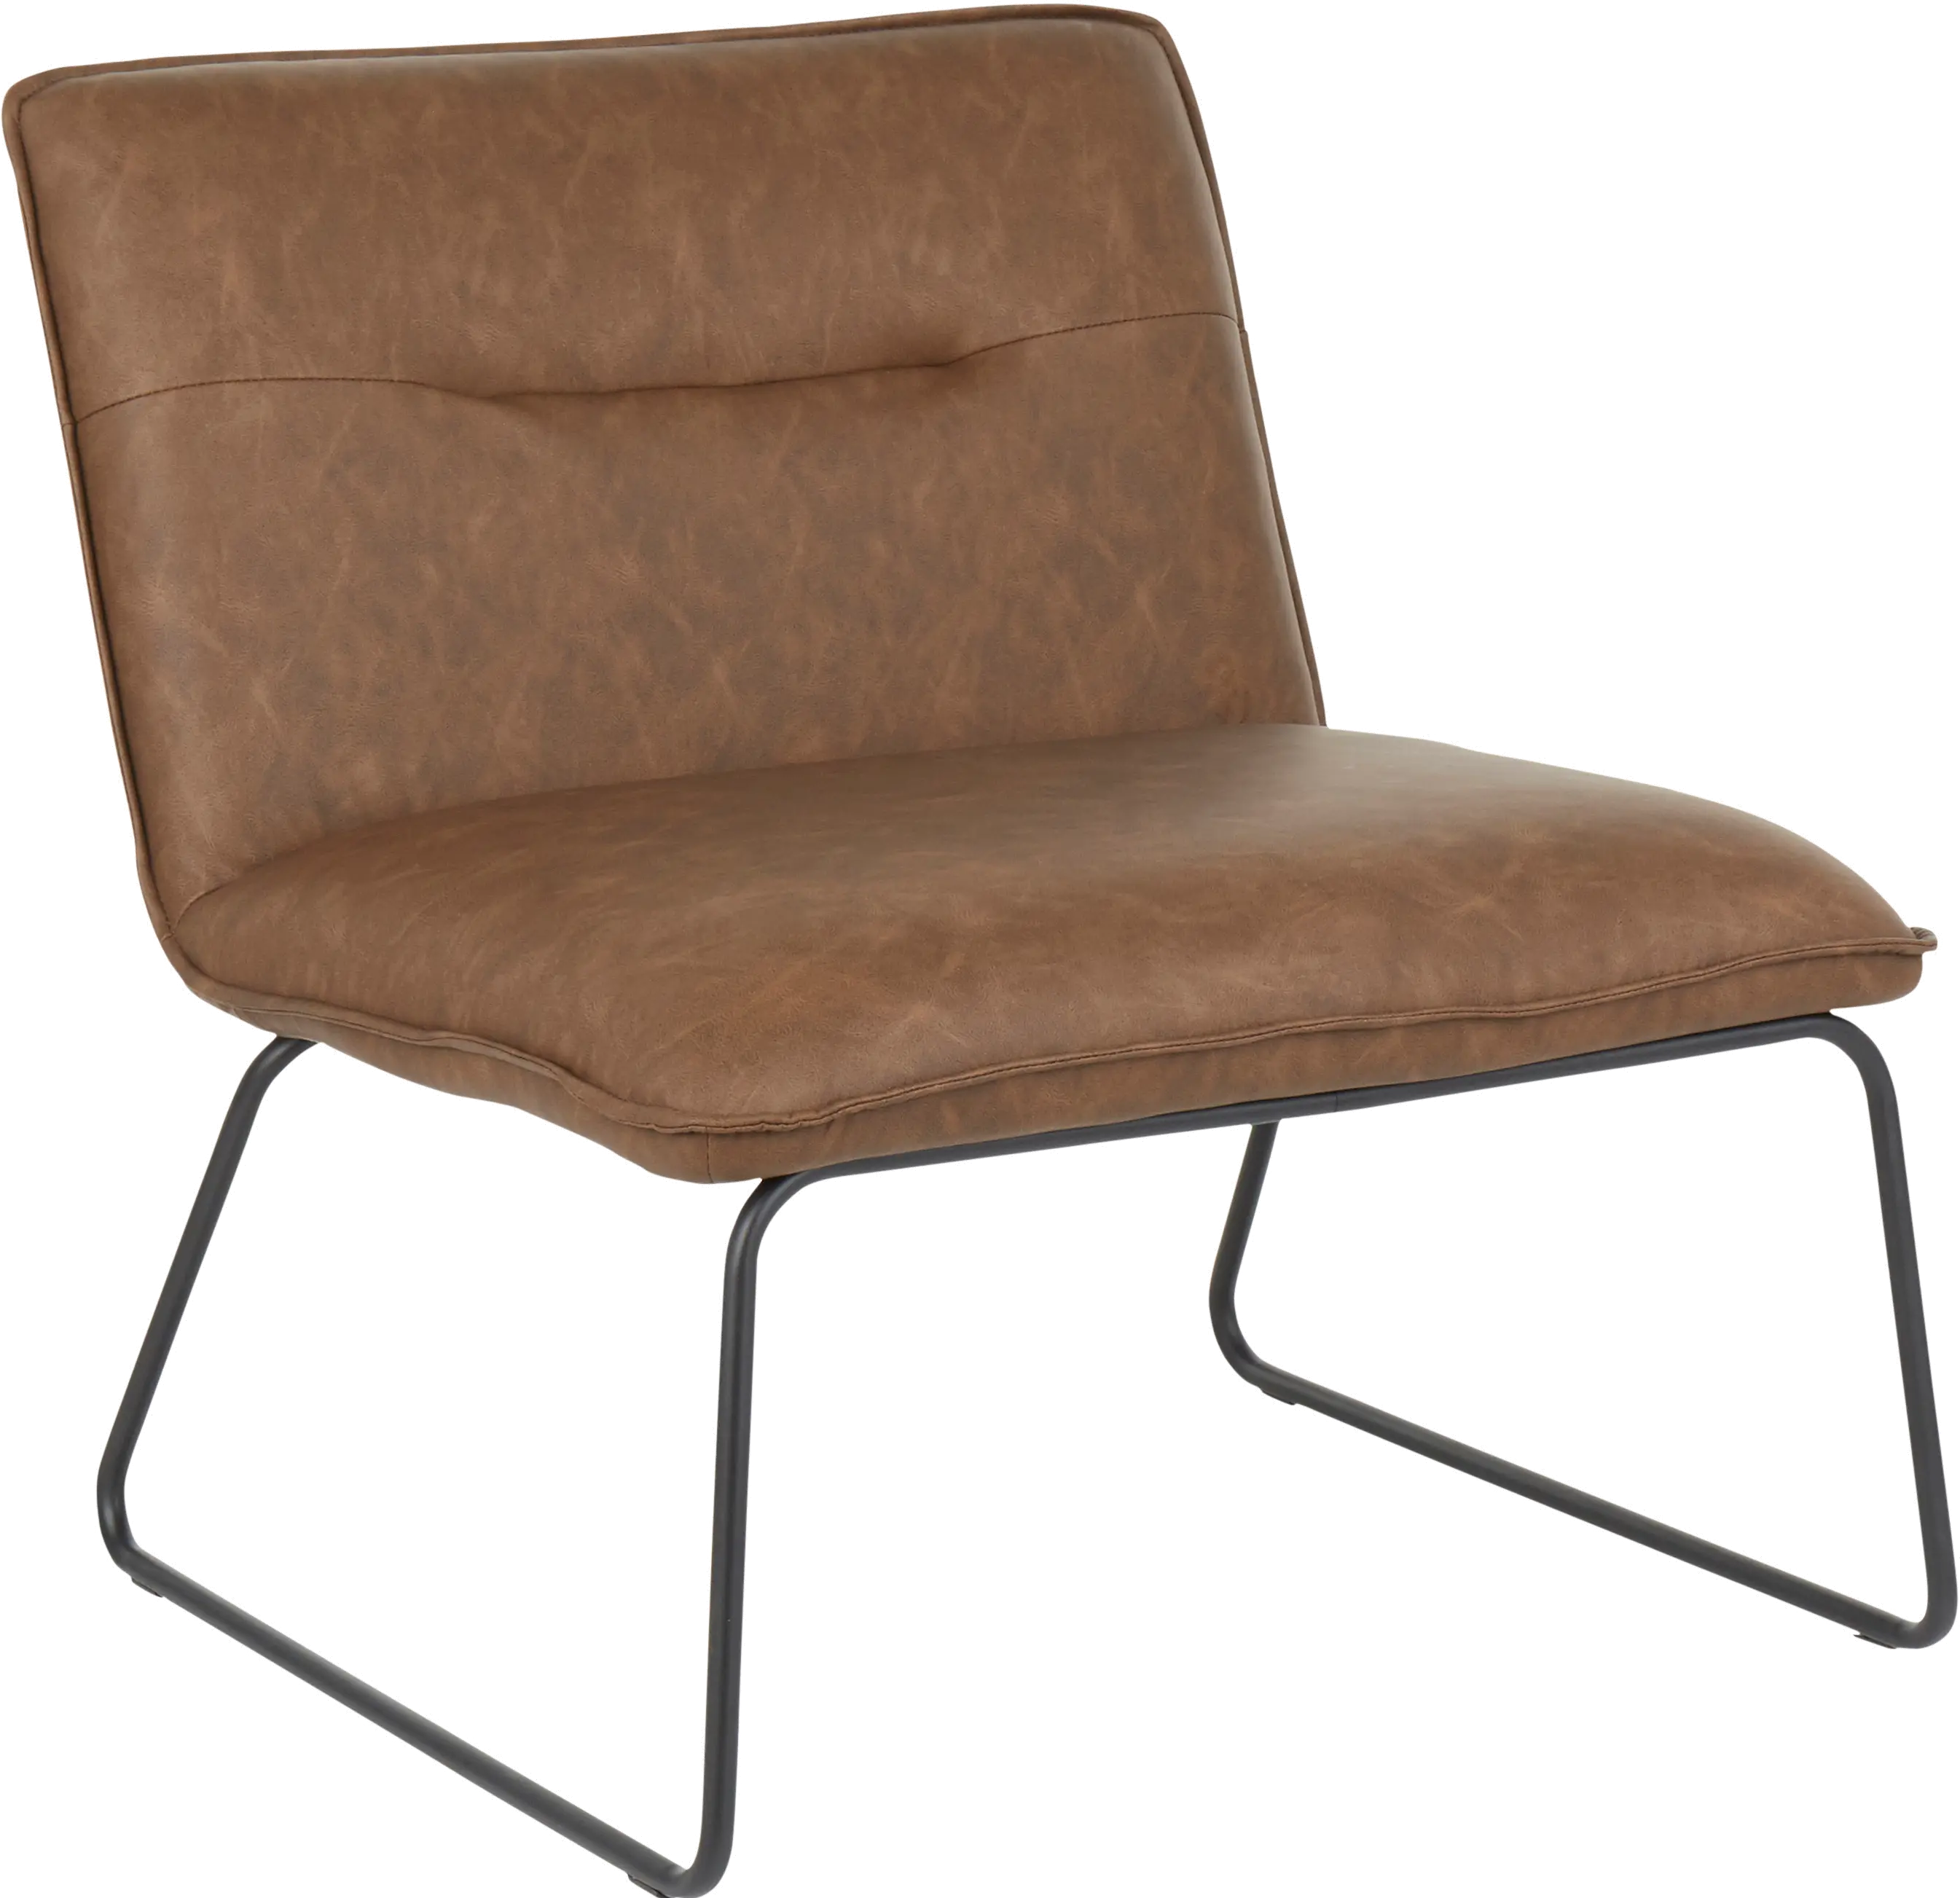 Casper Industrial Espresso Brown Faux Leather Accent Chair